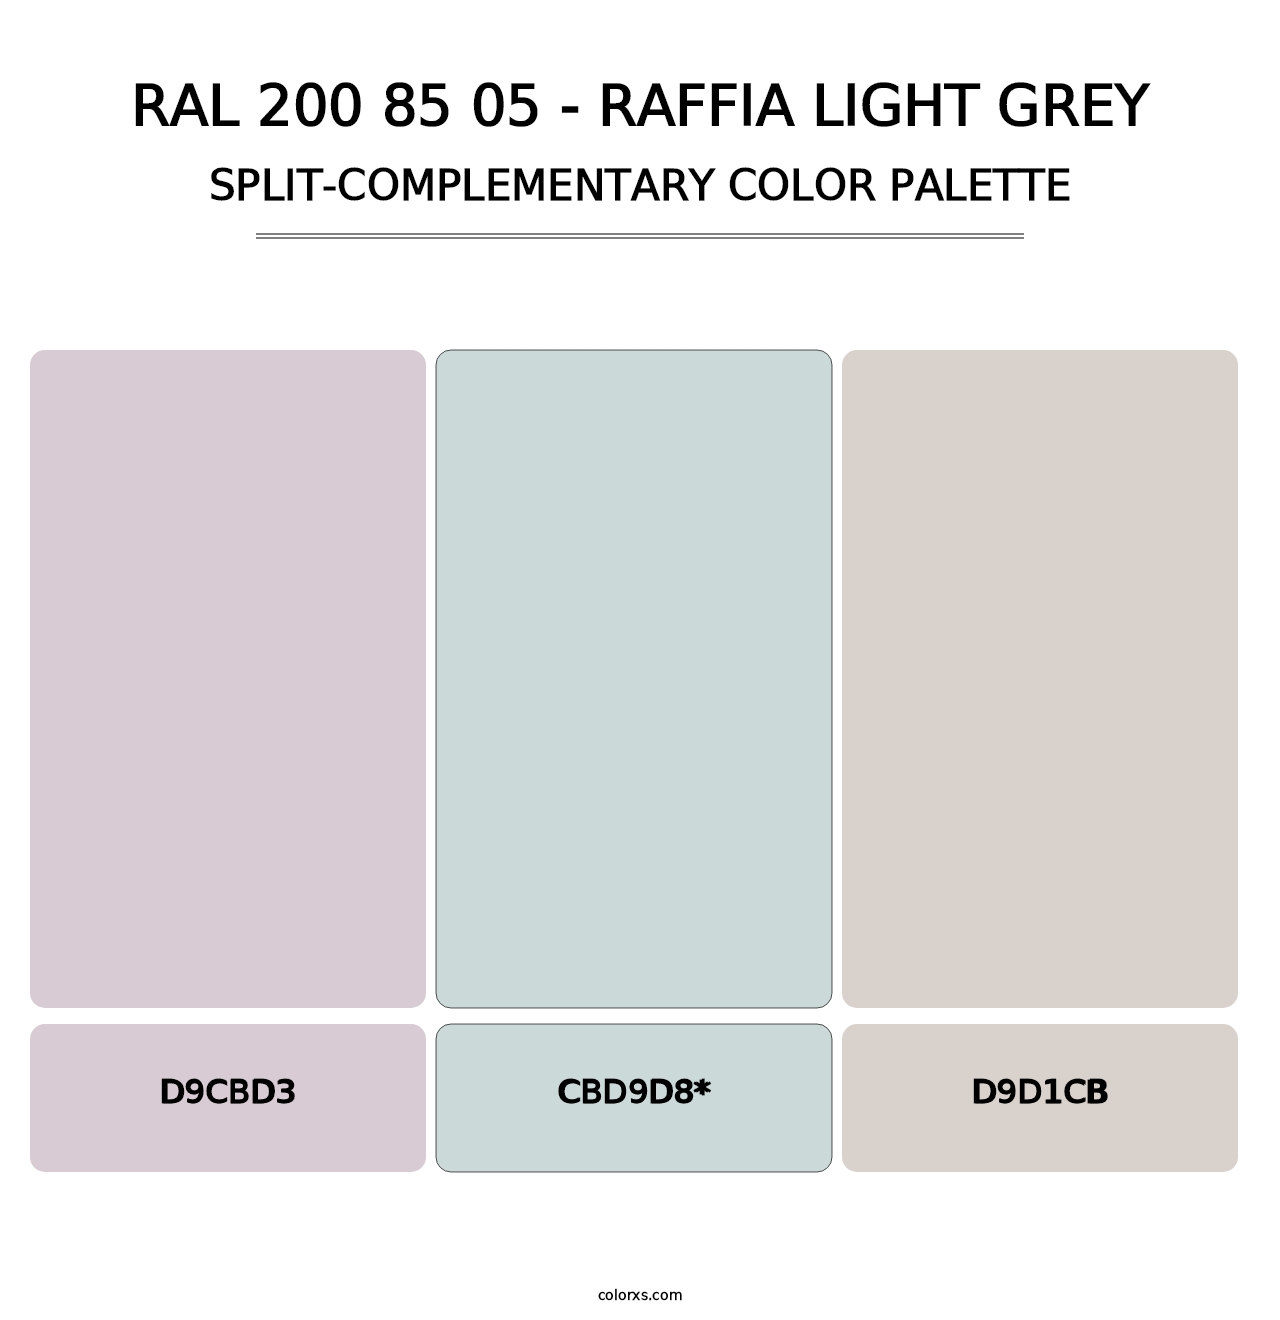 RAL 200 85 05 - Raffia Light Grey - Split-Complementary Color Palette